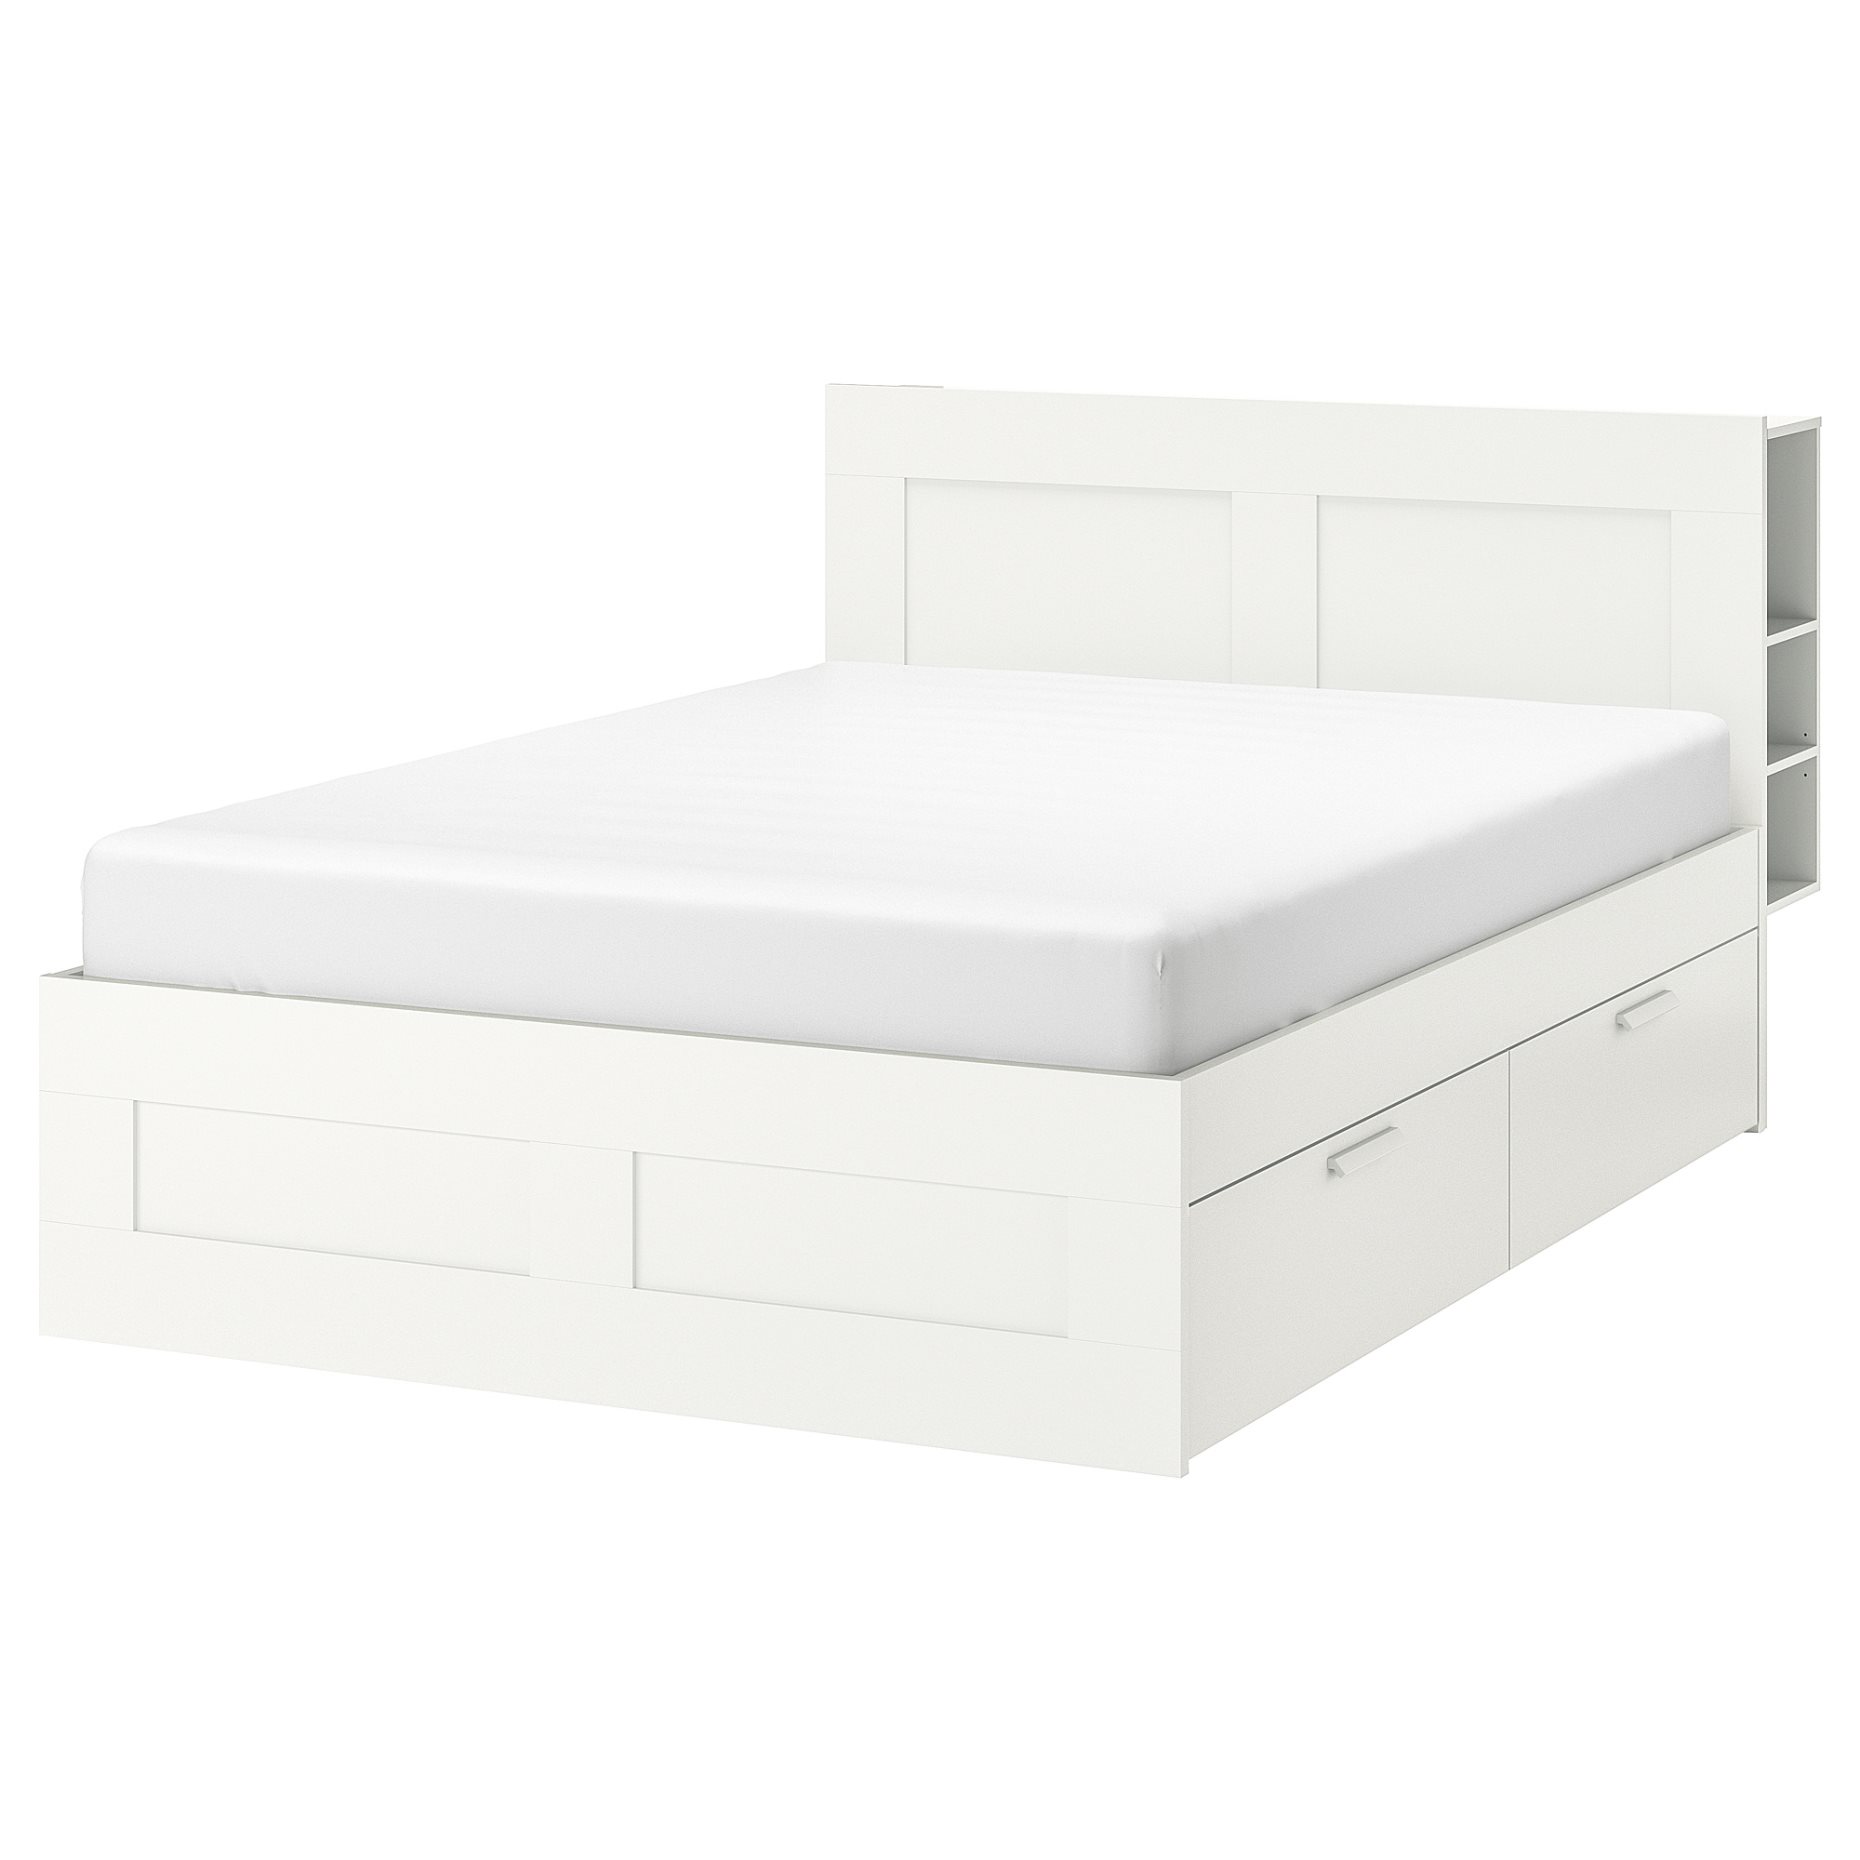 BRIMNES, κρεβάτι με αποθηκευτικό χώρο και κεφαλάρι, 140X200 cm, 991.574.69